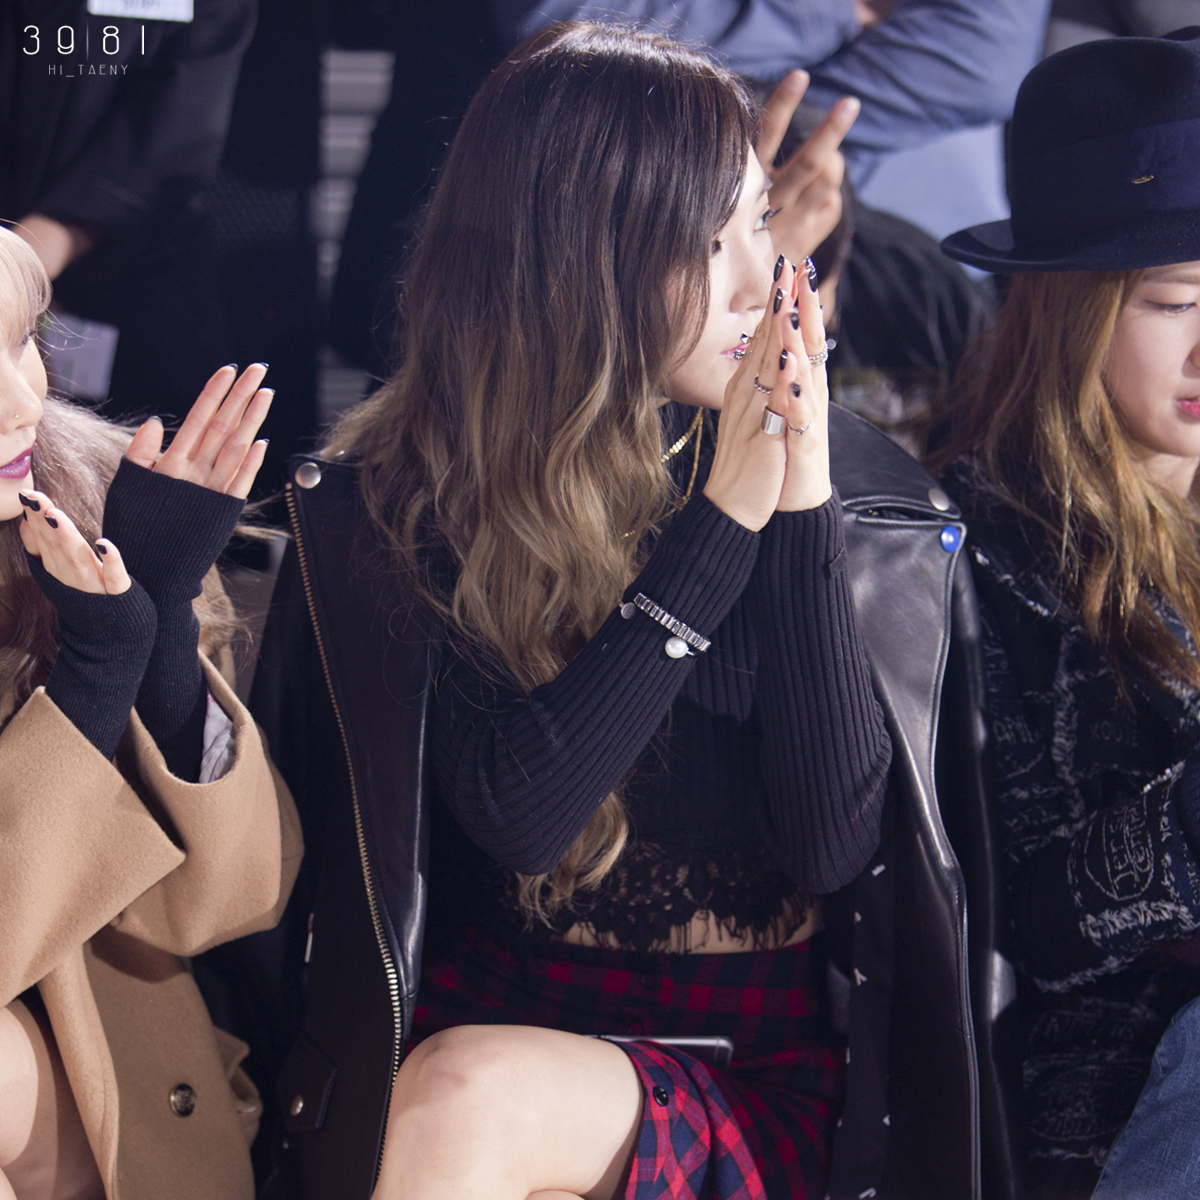 [PIC][16-10-2015]Tiffany tham dự "Hera Seoul Fashion Week 2016SS 'Steve.J & Yoni.P'"  vào tối nay 006aDyVGgw1ex54t85zhvj30xc0xcki8